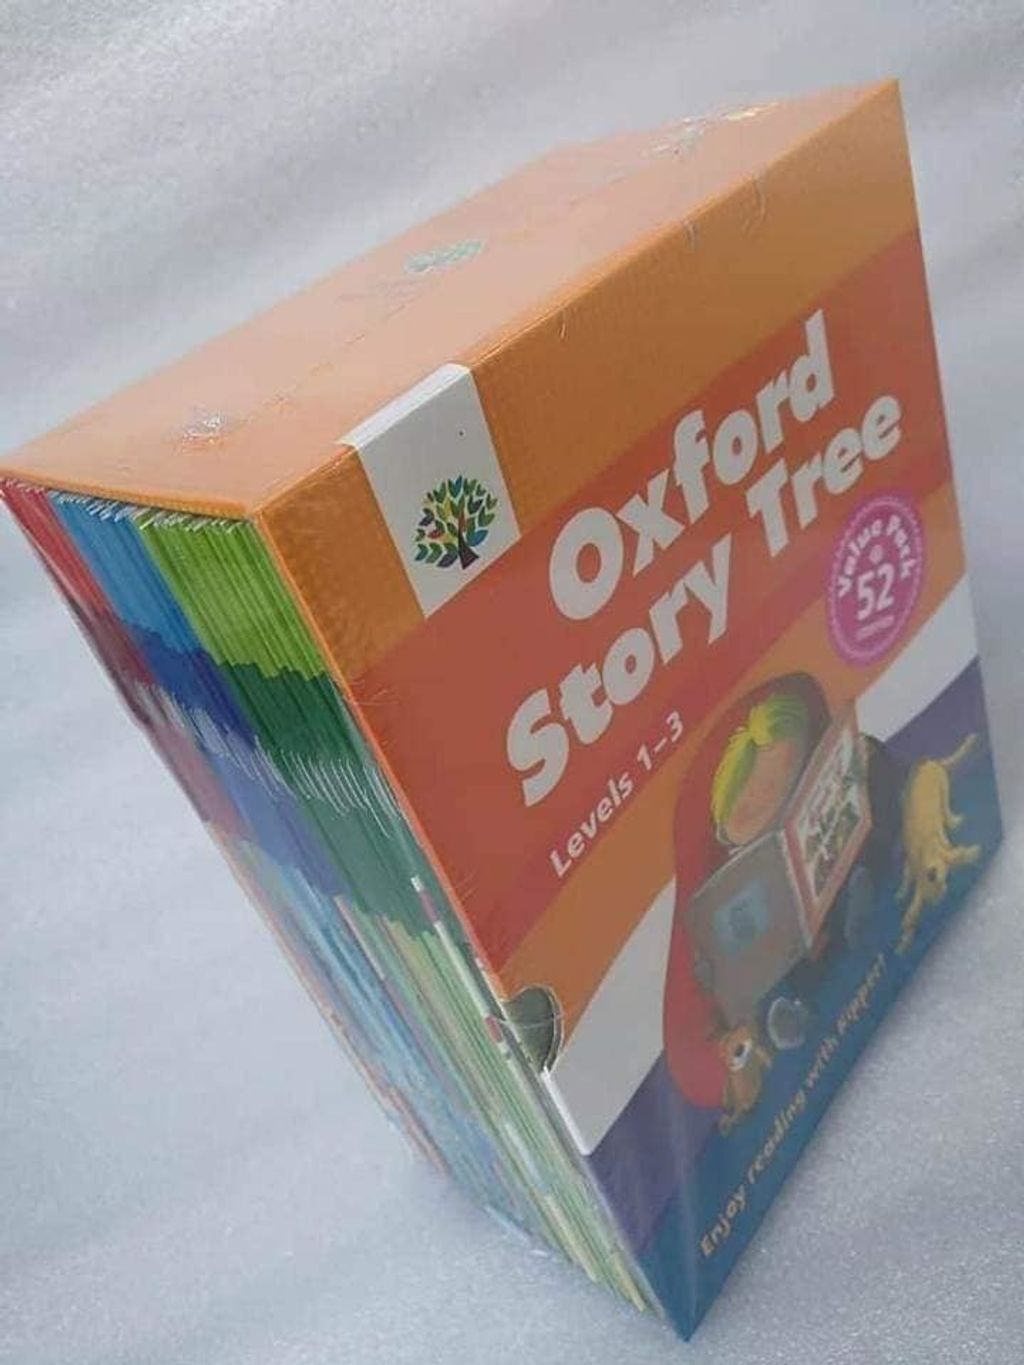 Genuine Oxford story tree box set Level 1-3 52 books – LITTLE BOOK LOUNGE